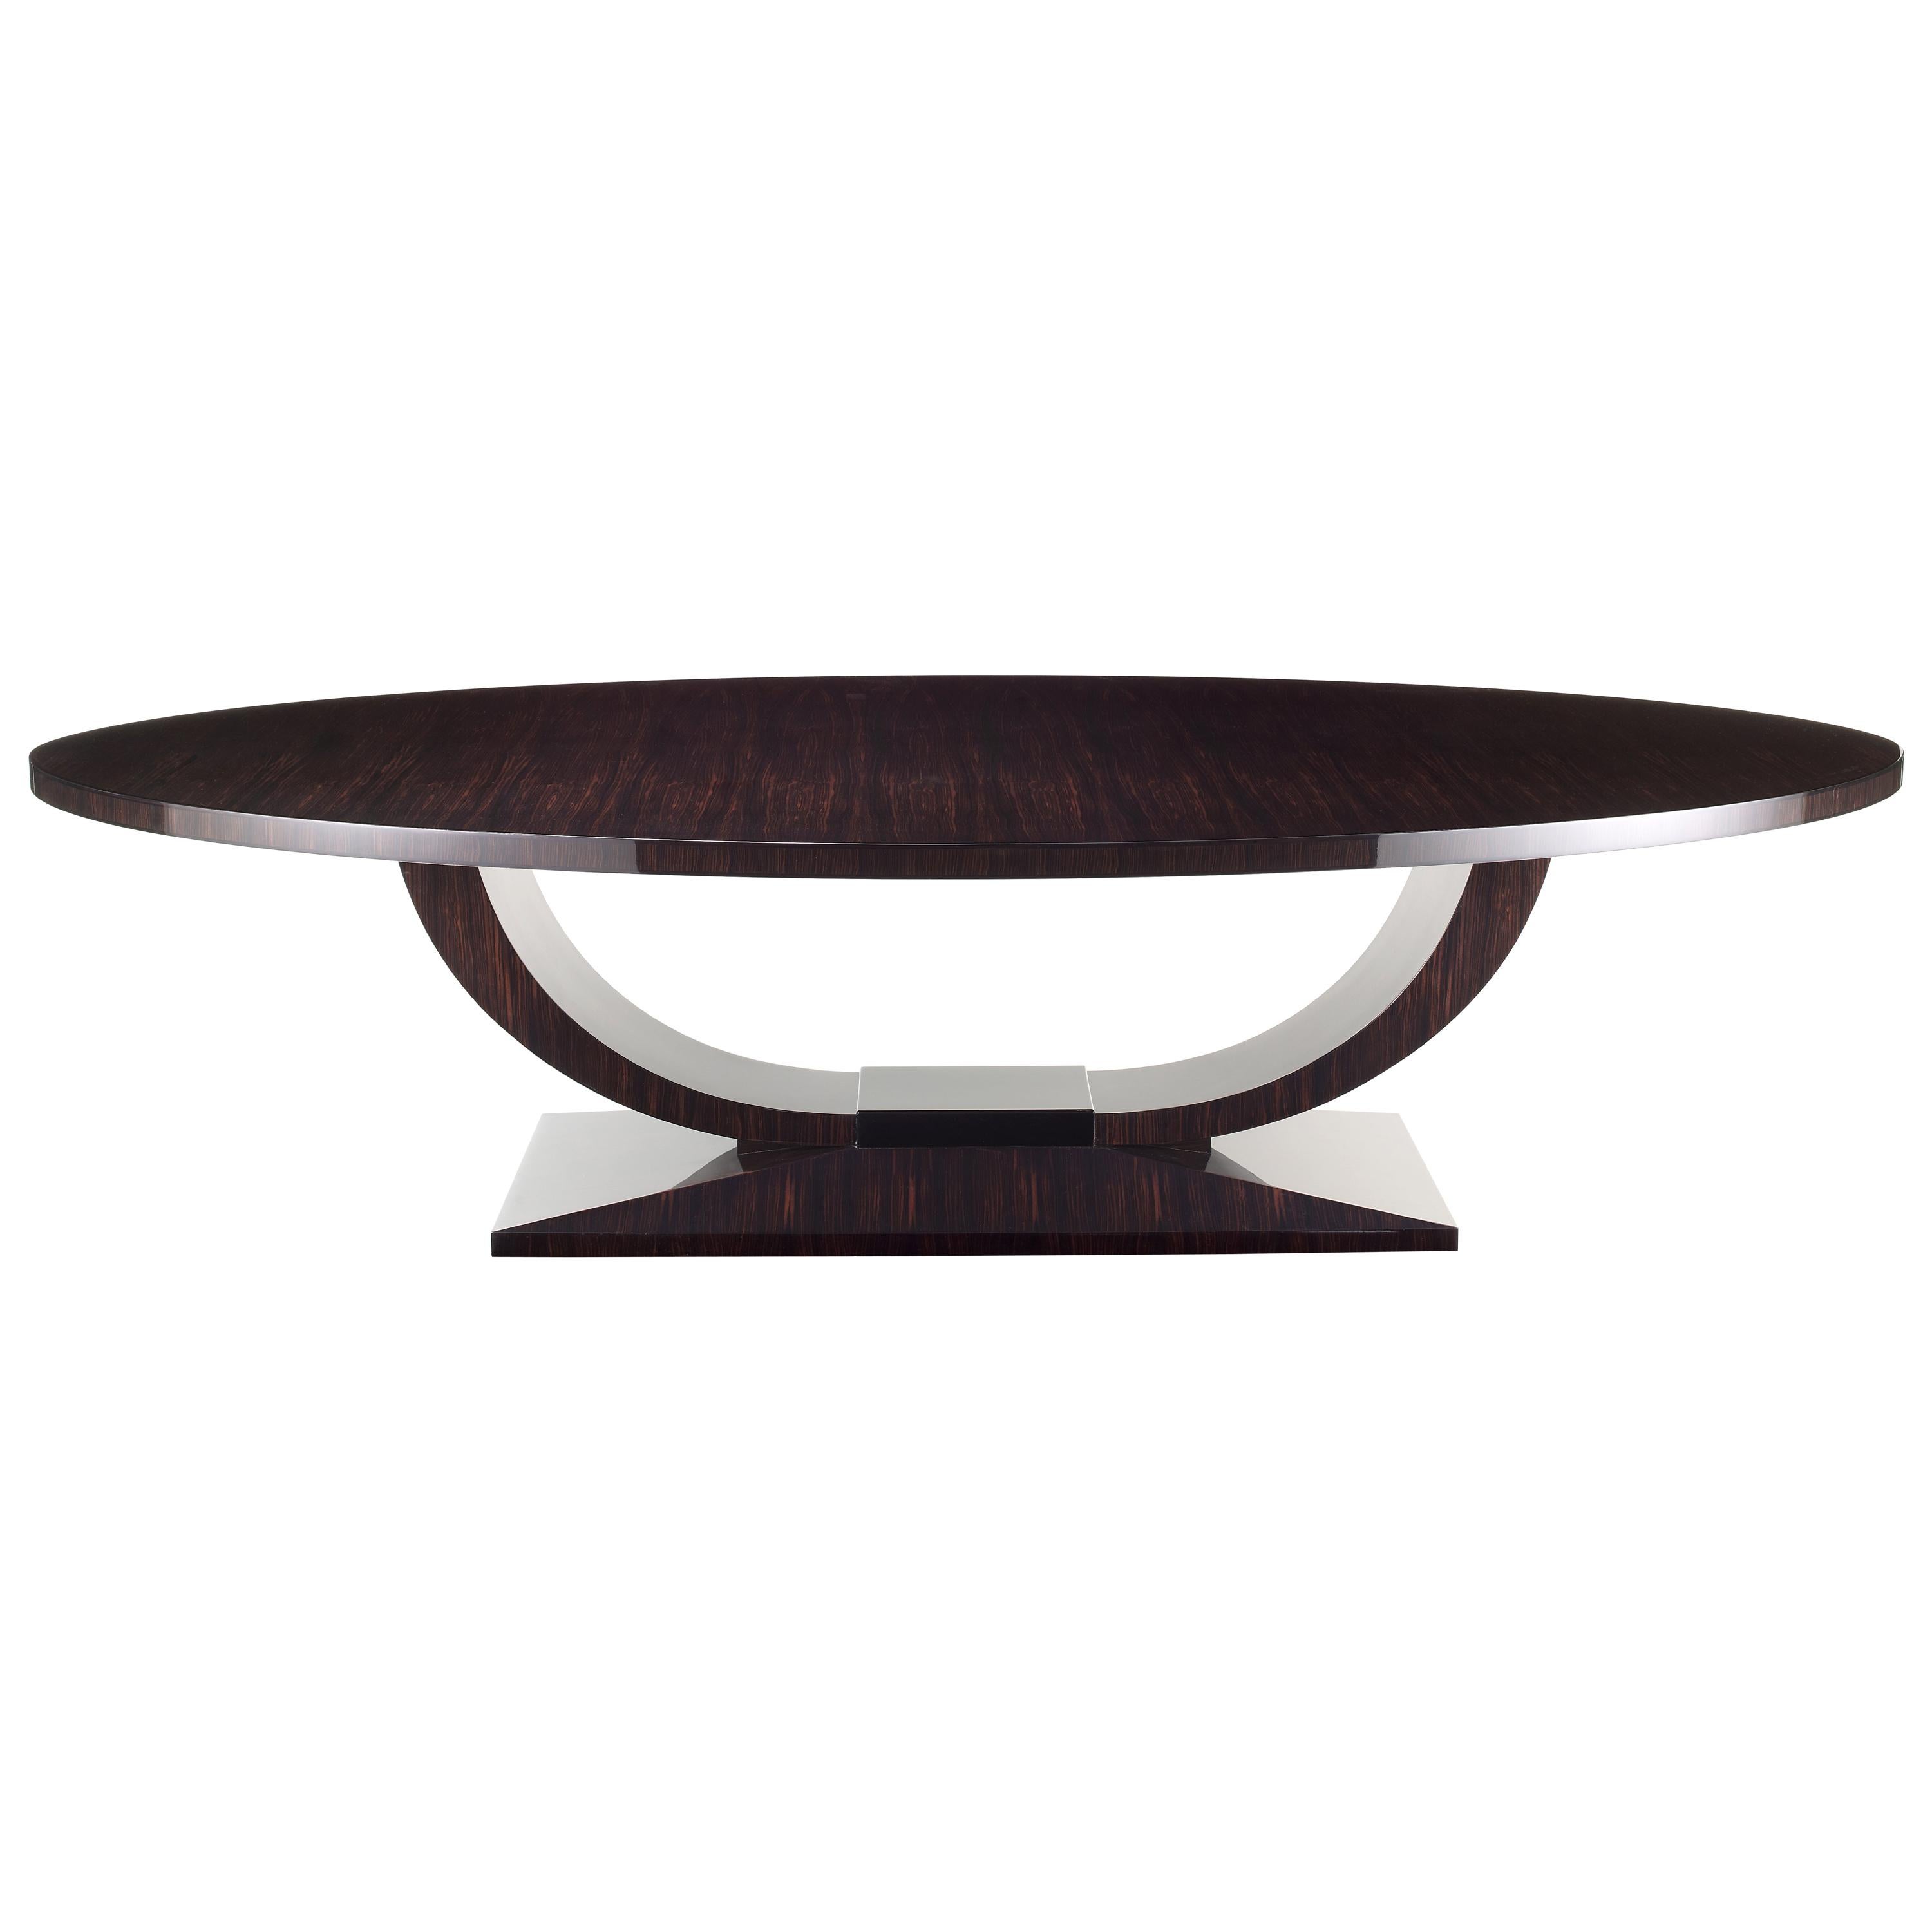 Art Deco Style Elliptical 'Ovington' Dining Table in Brown Macassar Ebony Wood For Sale